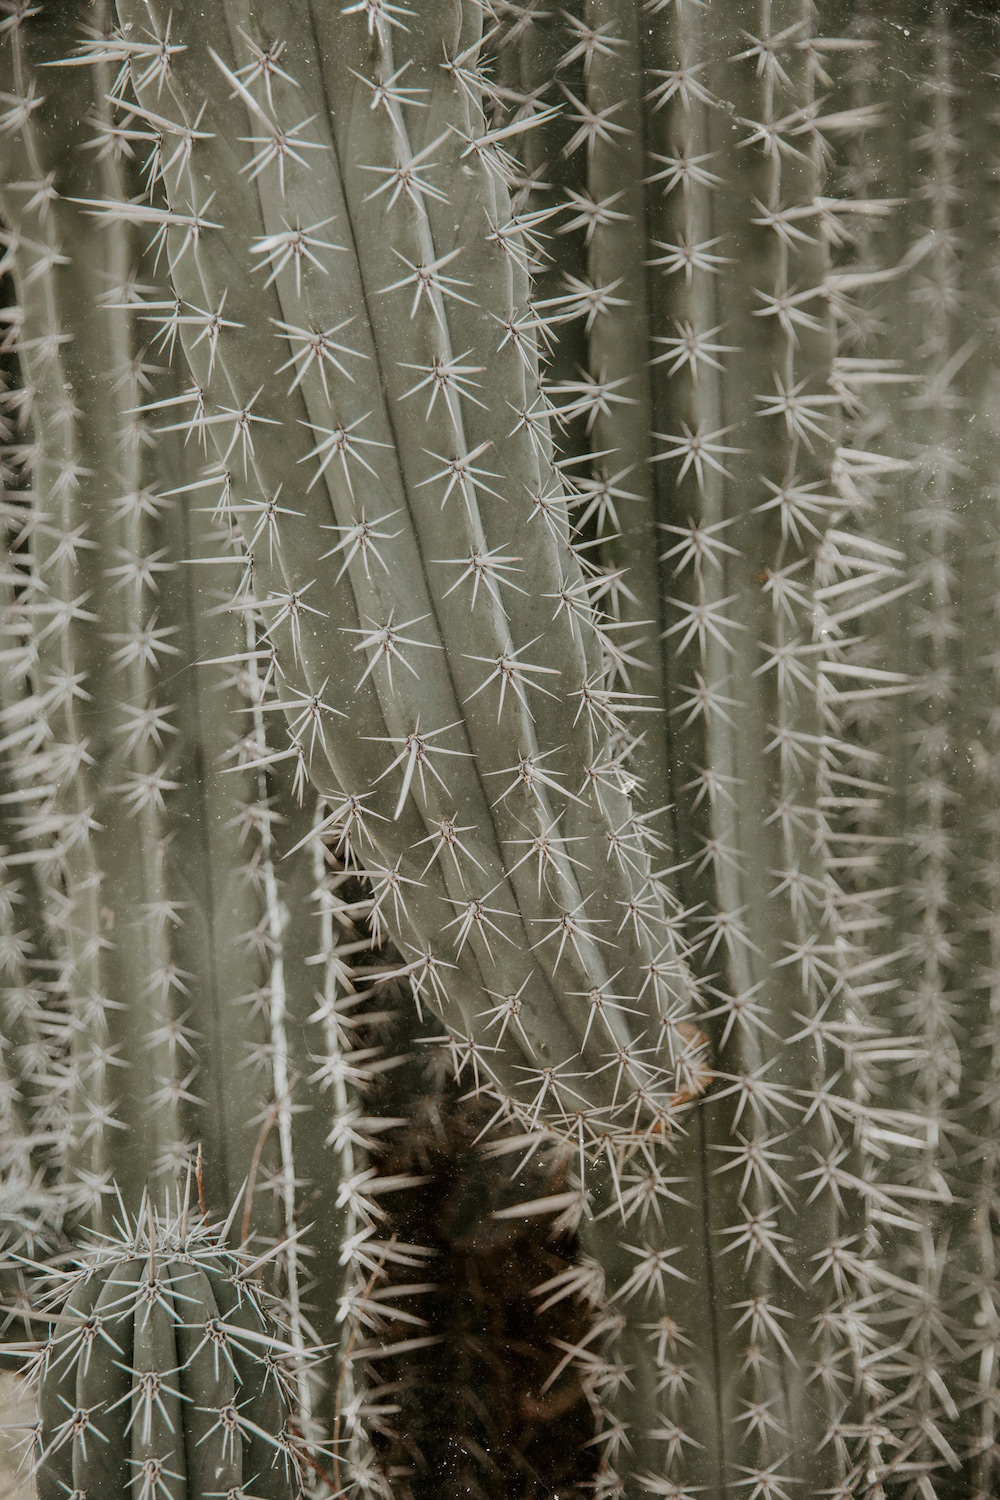 Dash of Darling | Planning your visit to the Desert Botanical Garden in Phoenix